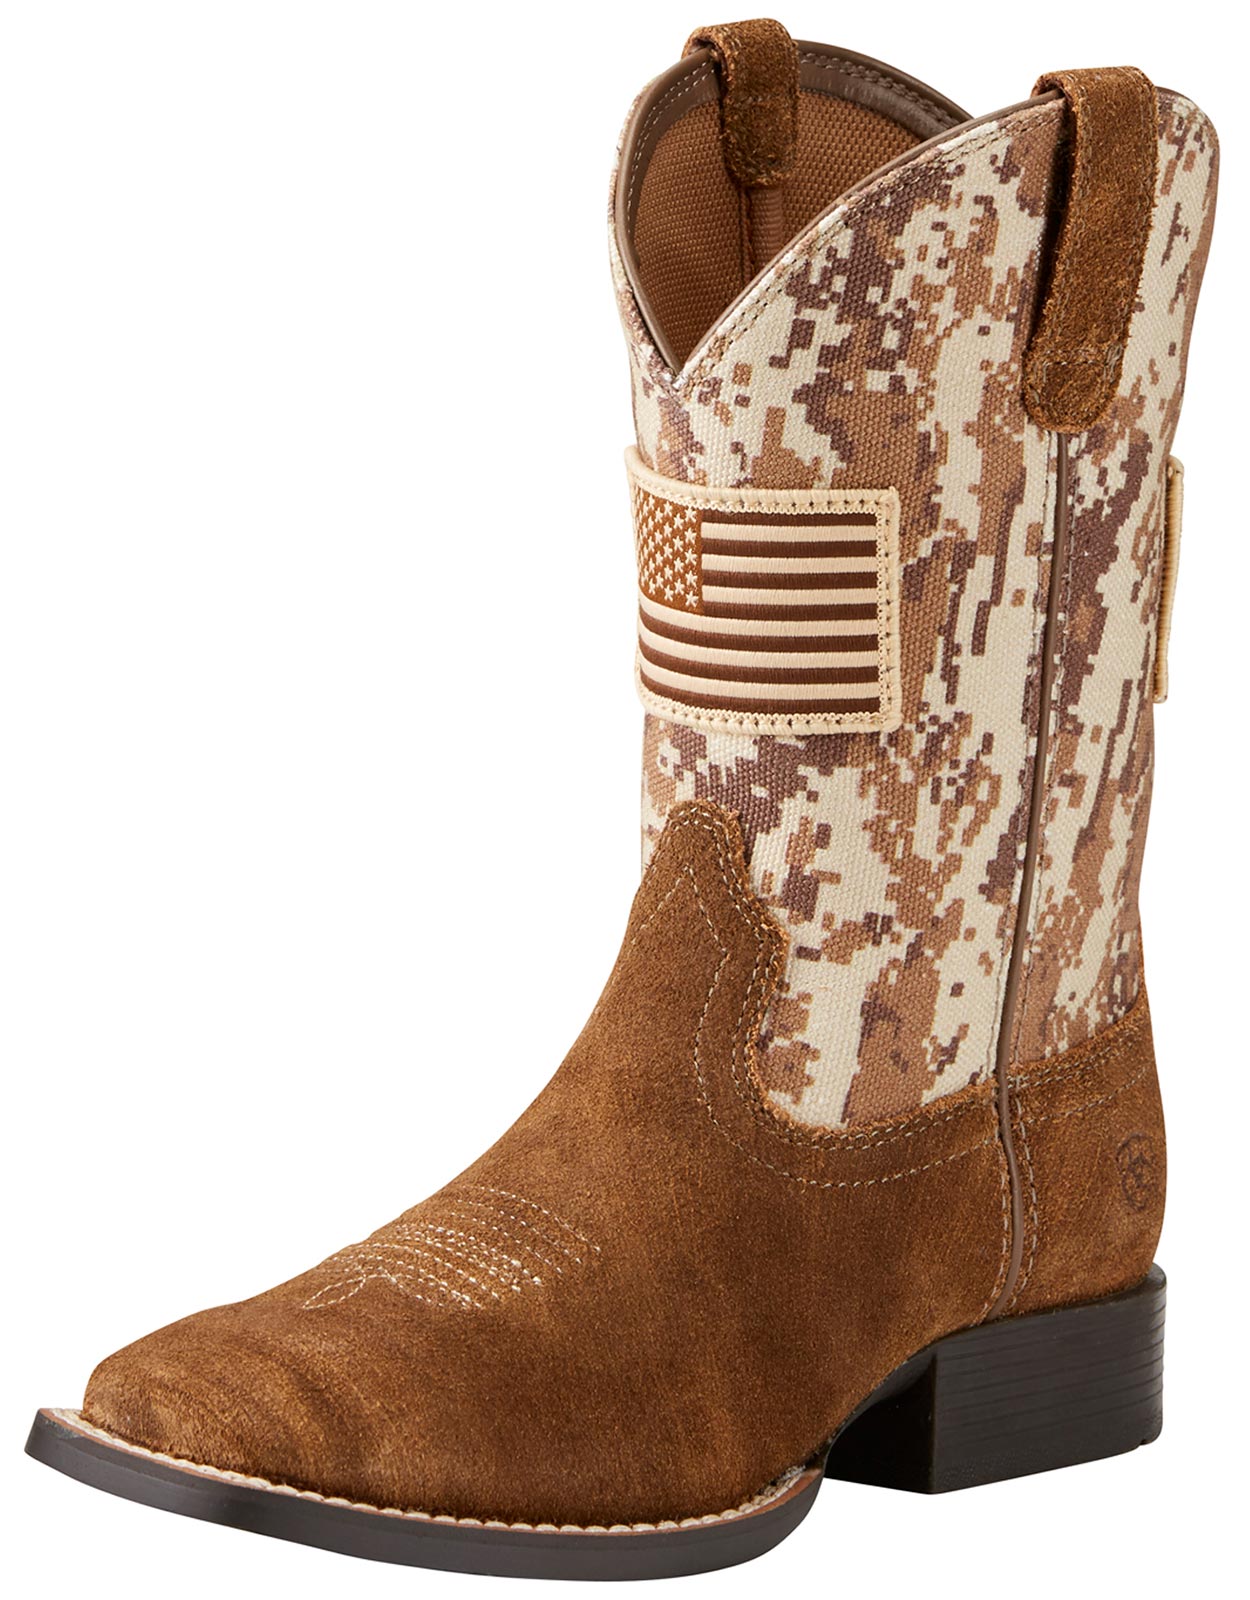 Ariat Children's Patriot Square Toe Cowboy Boots - Brown Camo